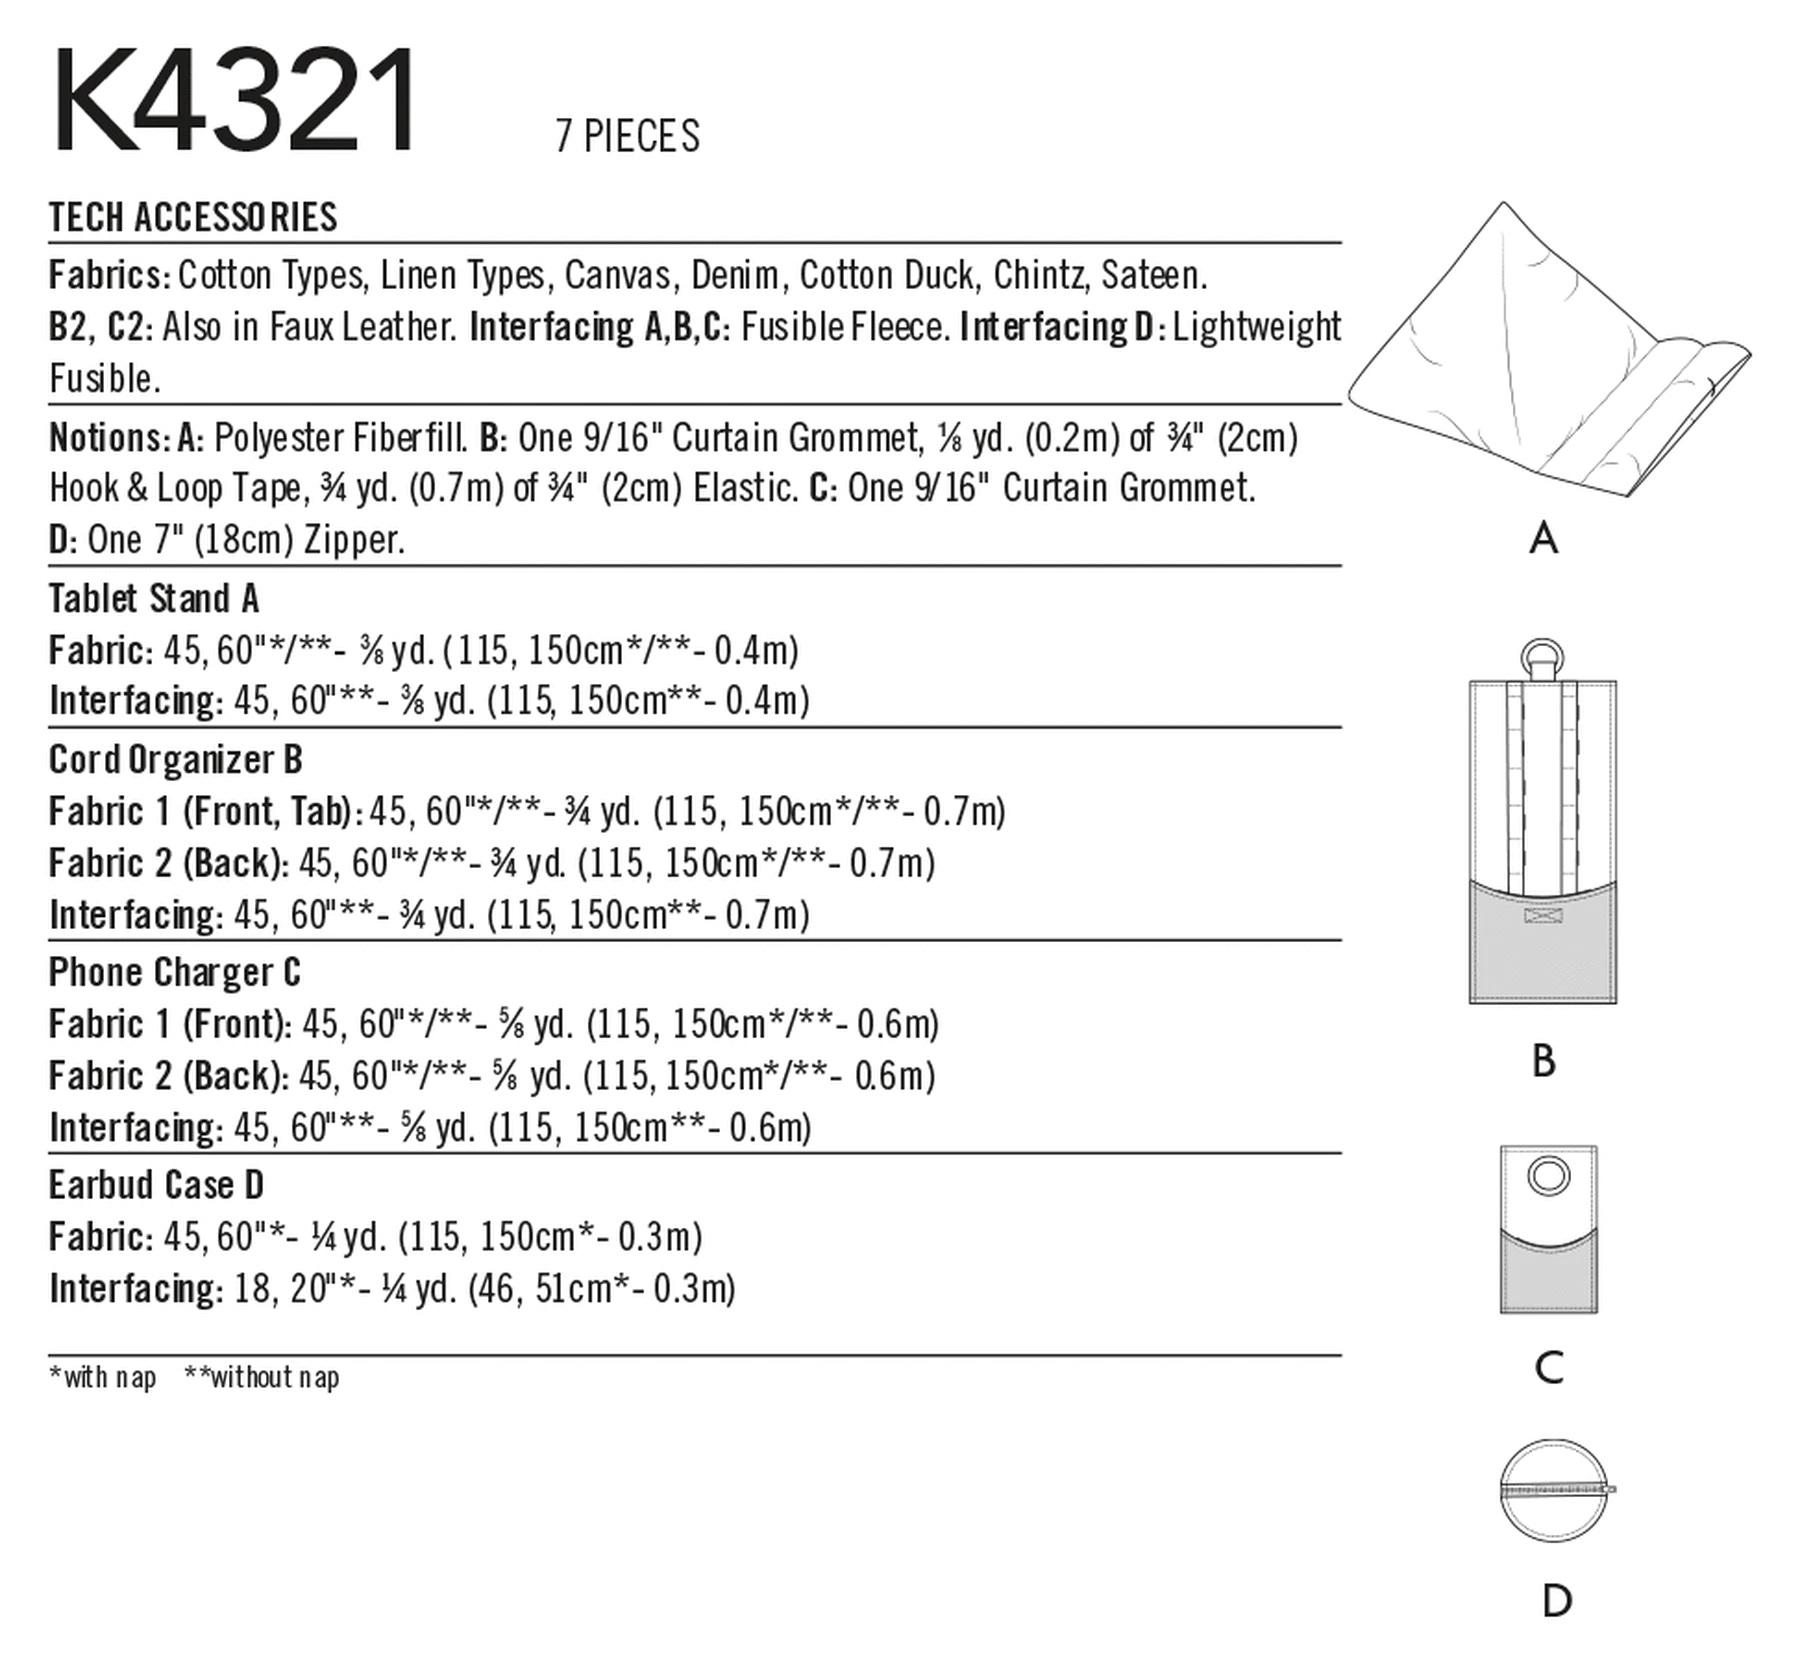 Kwik Sew 4321 Tech Accessories